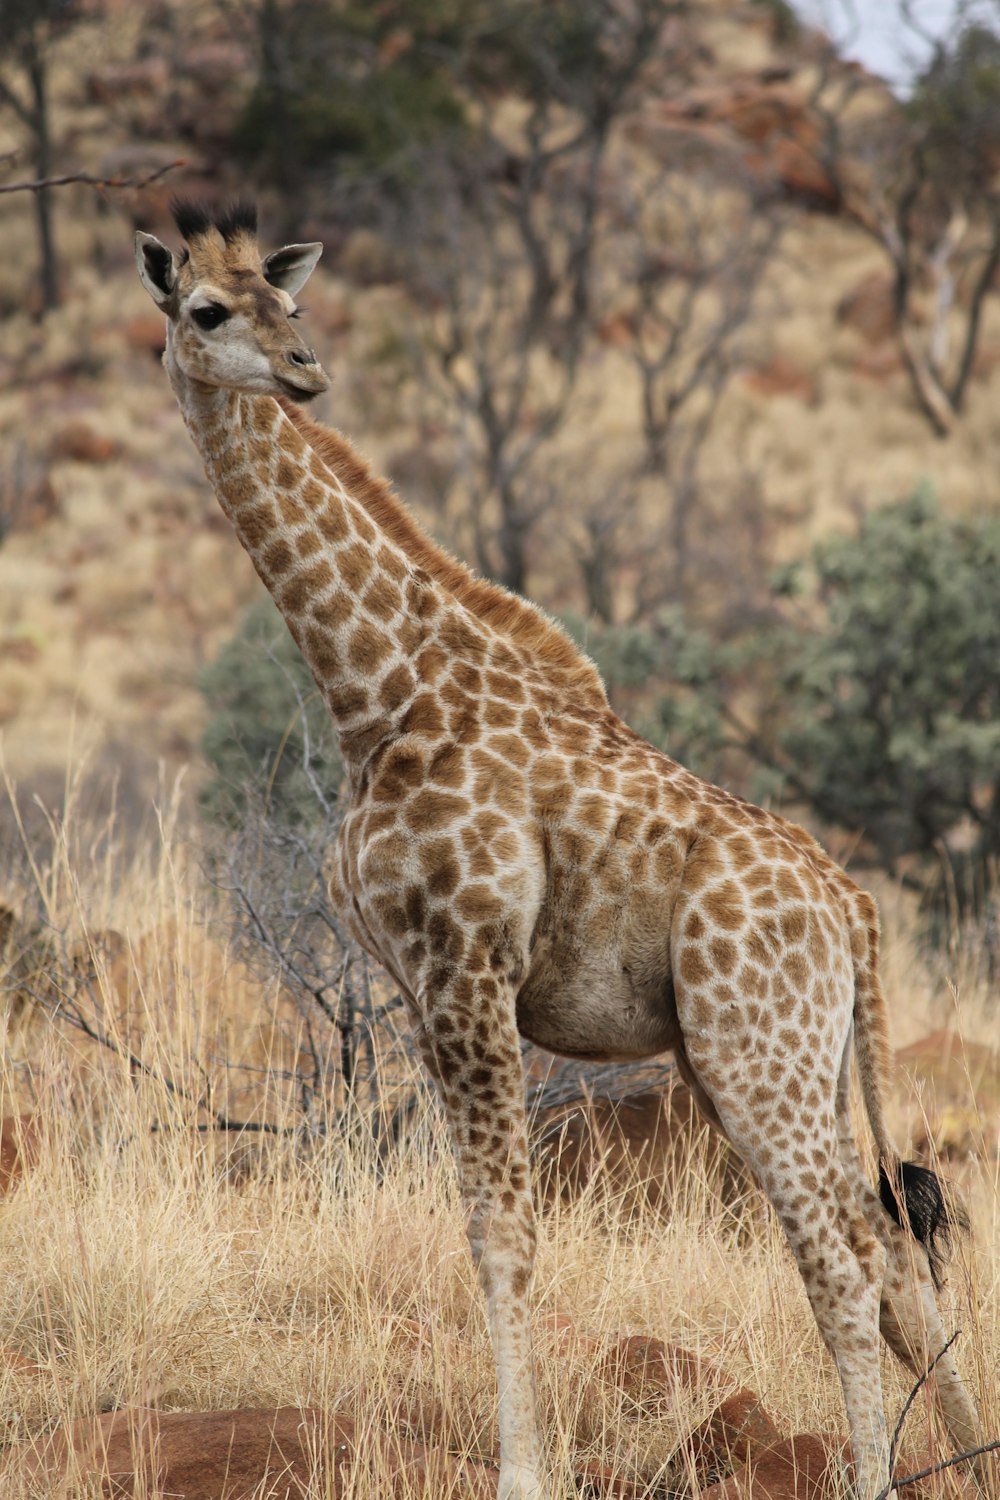 giraffe on brown grass field during daytime